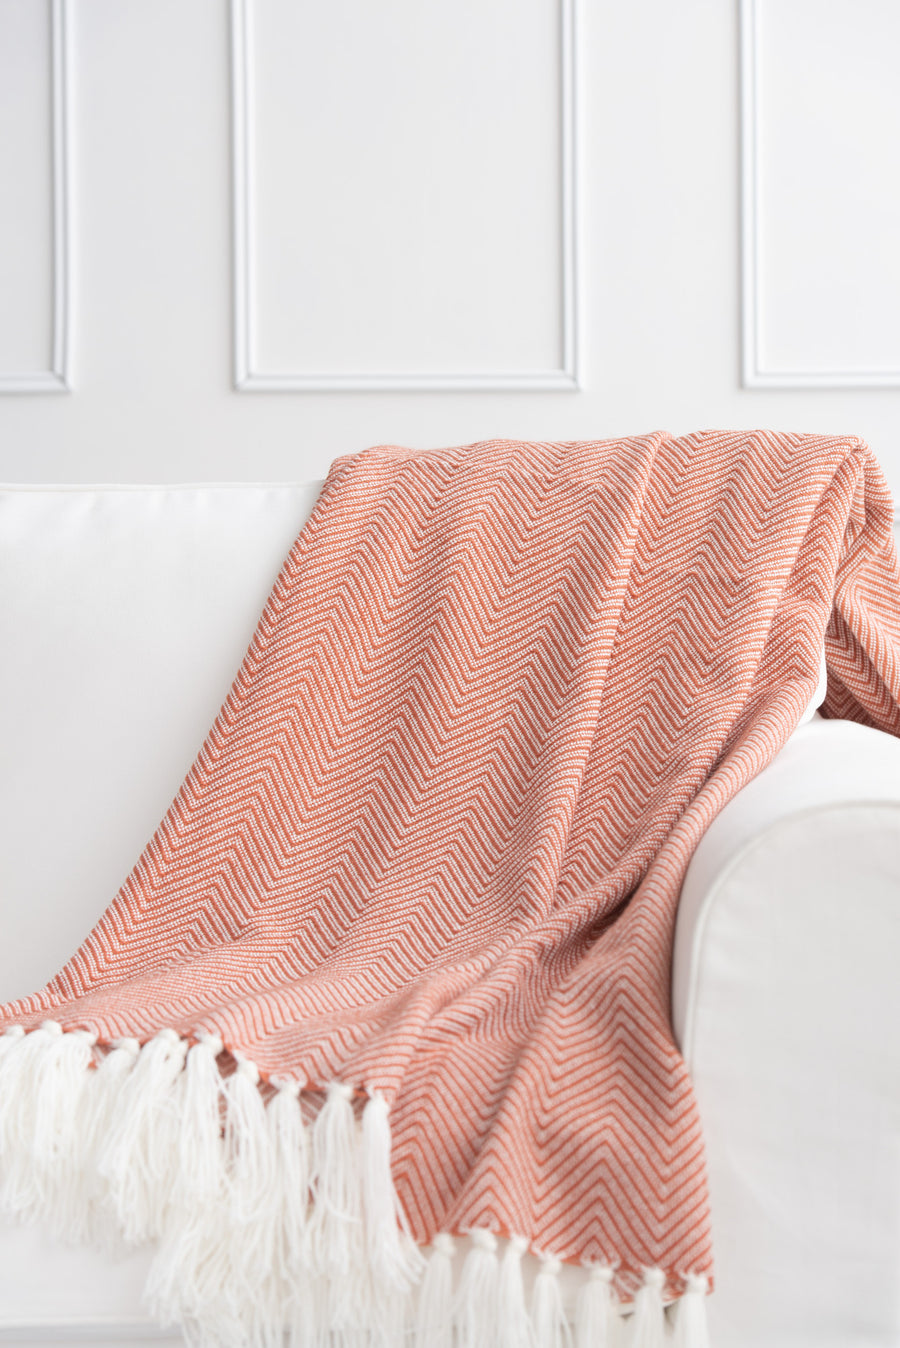 Classic Knitted Throw Blanket with Fringes, Neda, Herringbone Stripes, Rust Orange, 50